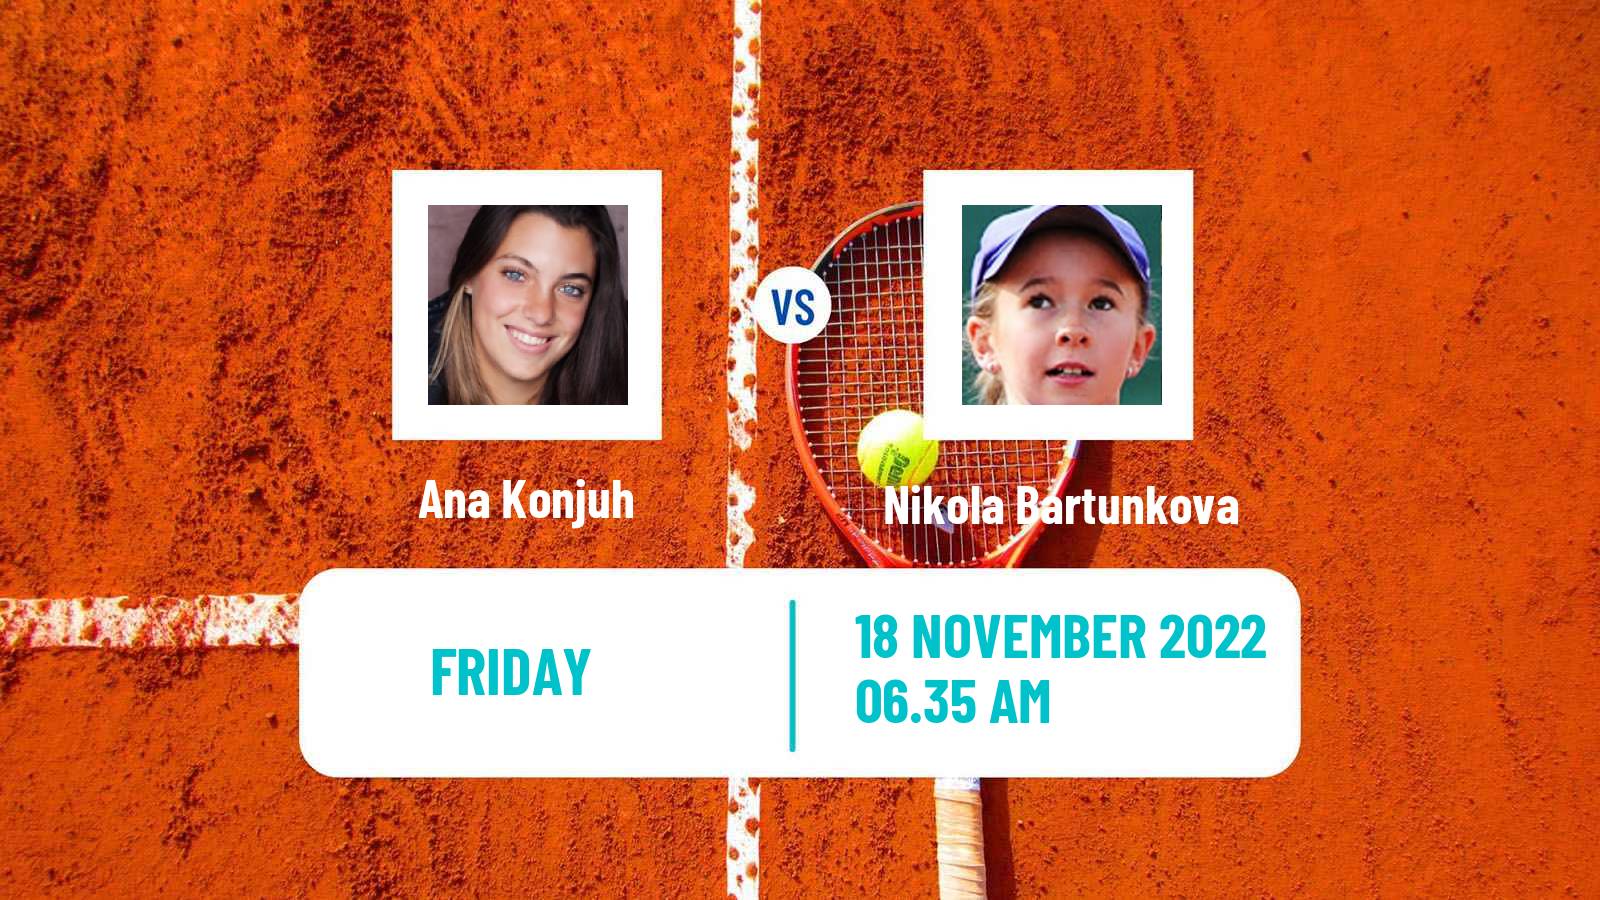 Tennis ITF Tournaments Ana Konjuh - Nikola Bartunkova